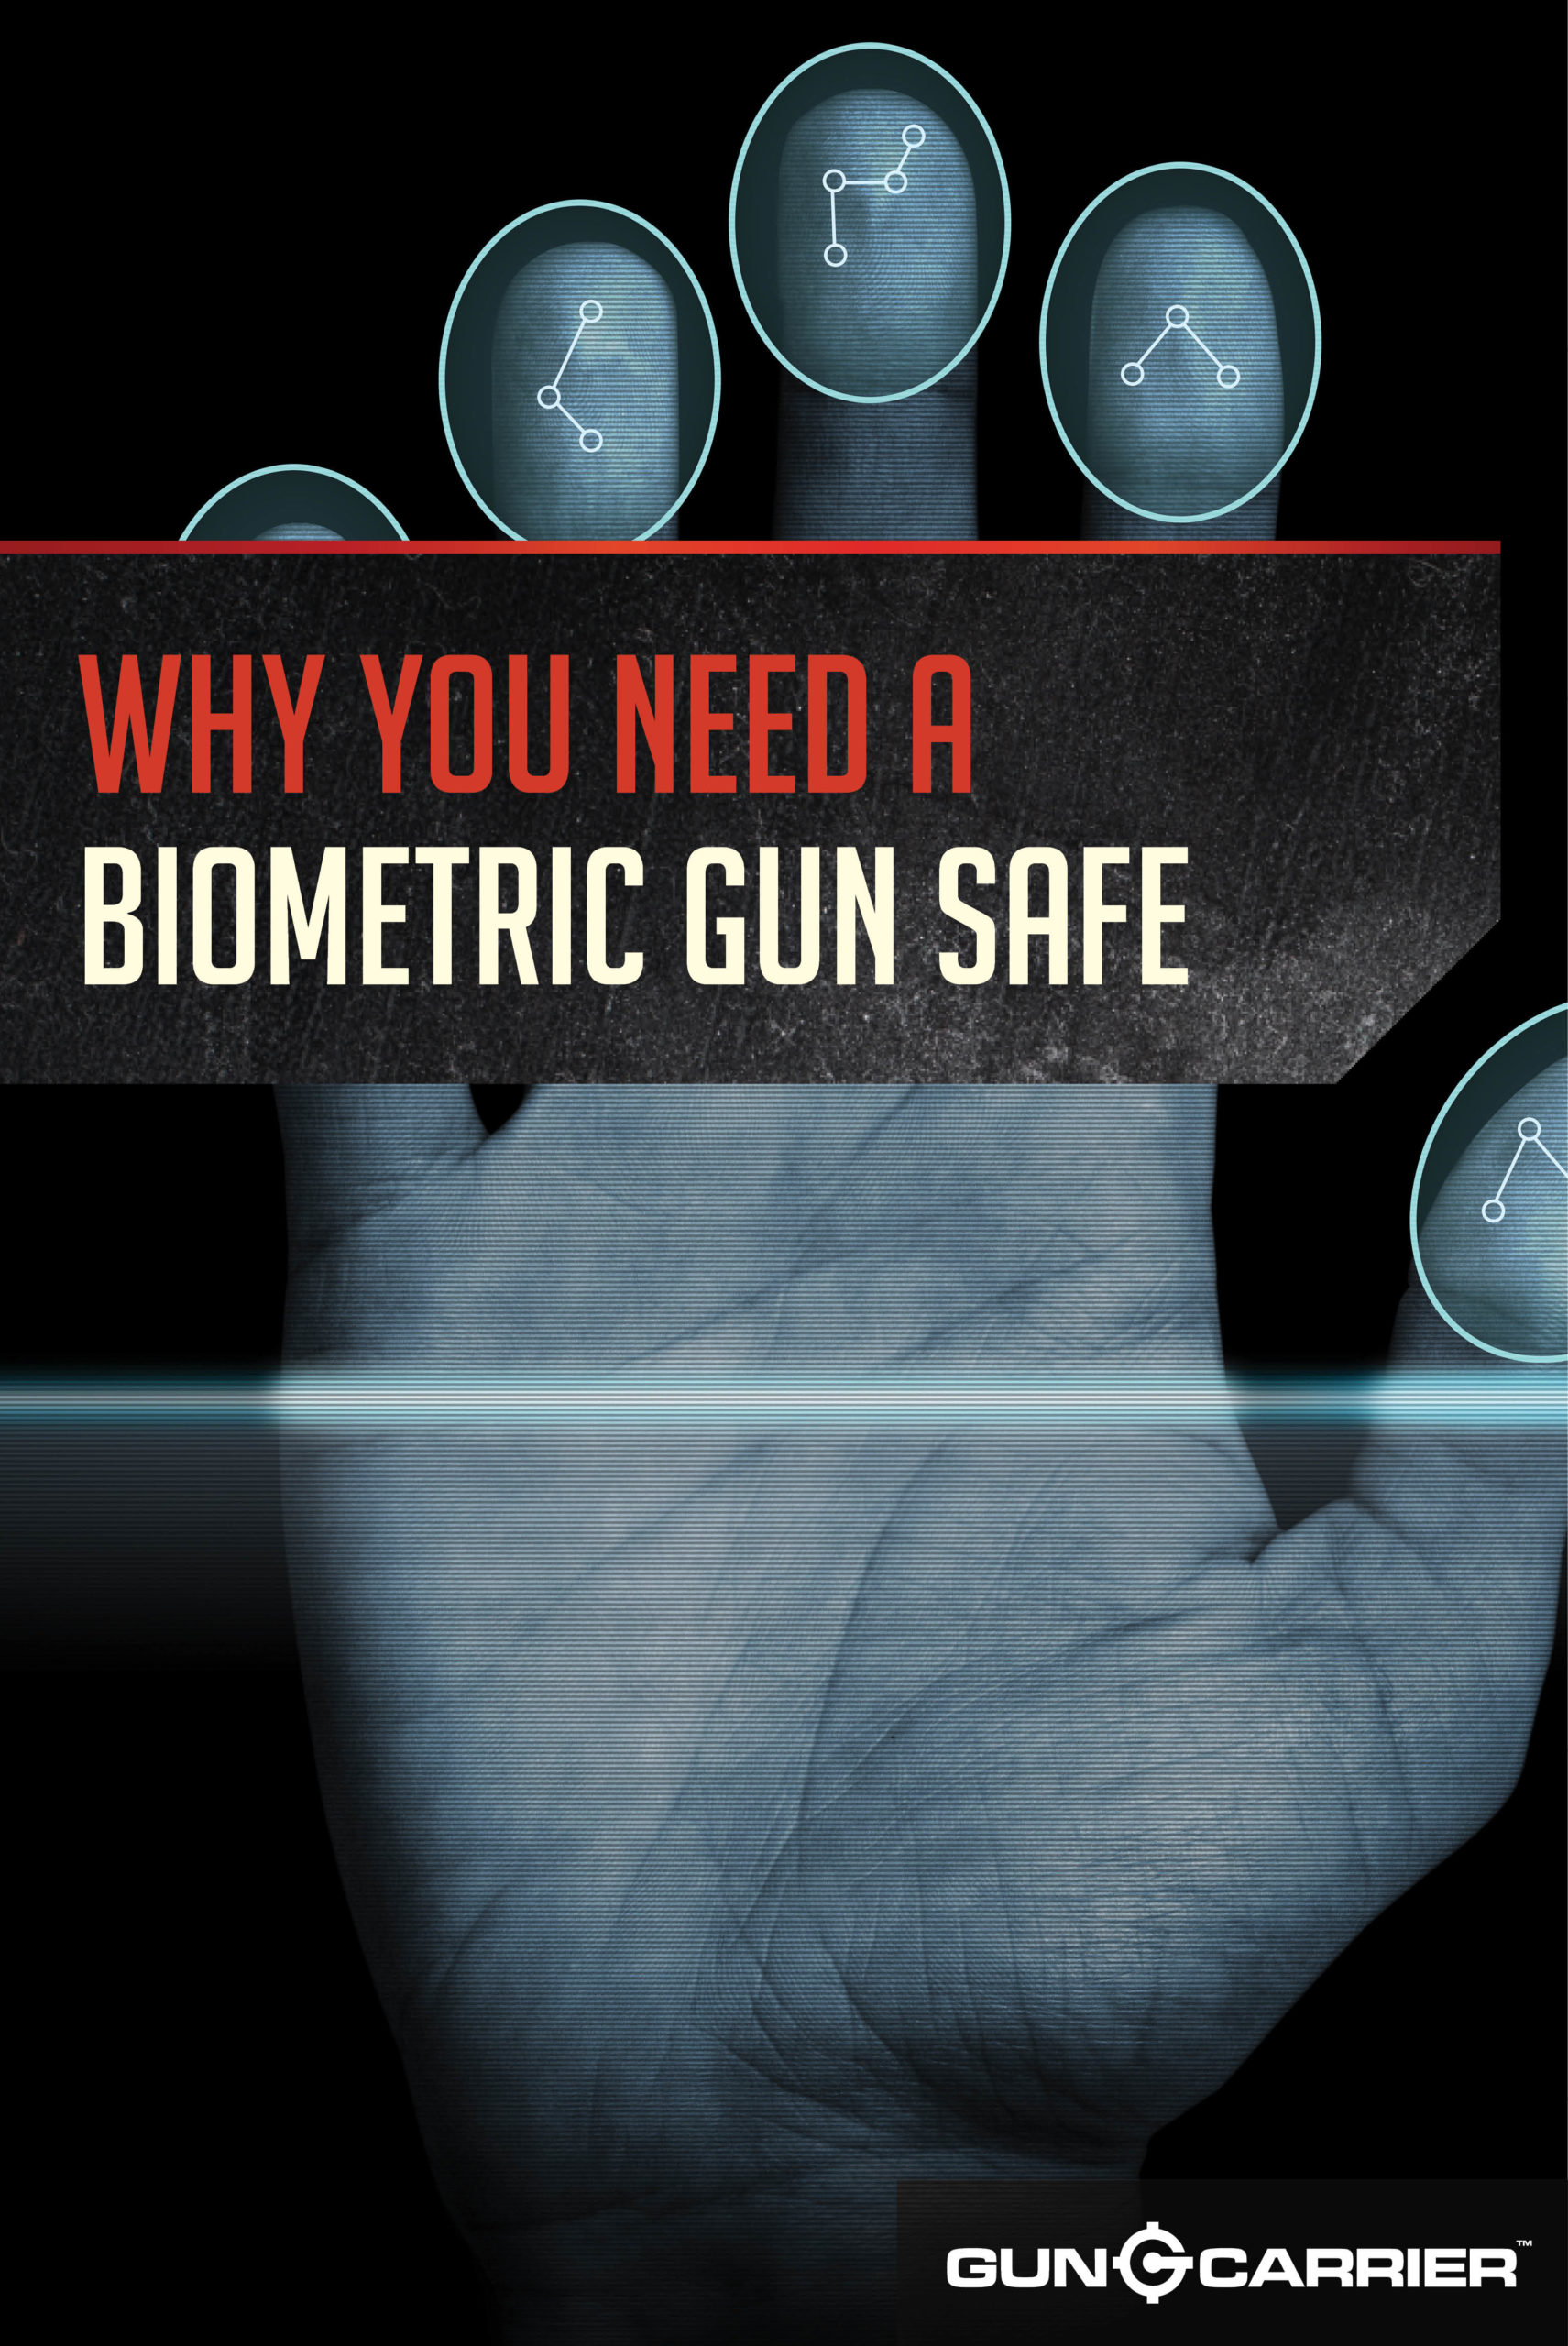 The Pros of a Biometric Gun Safe by Gun Carrier at https://guncarriernews.wpengine.com/biometric-gun-safe-pros/